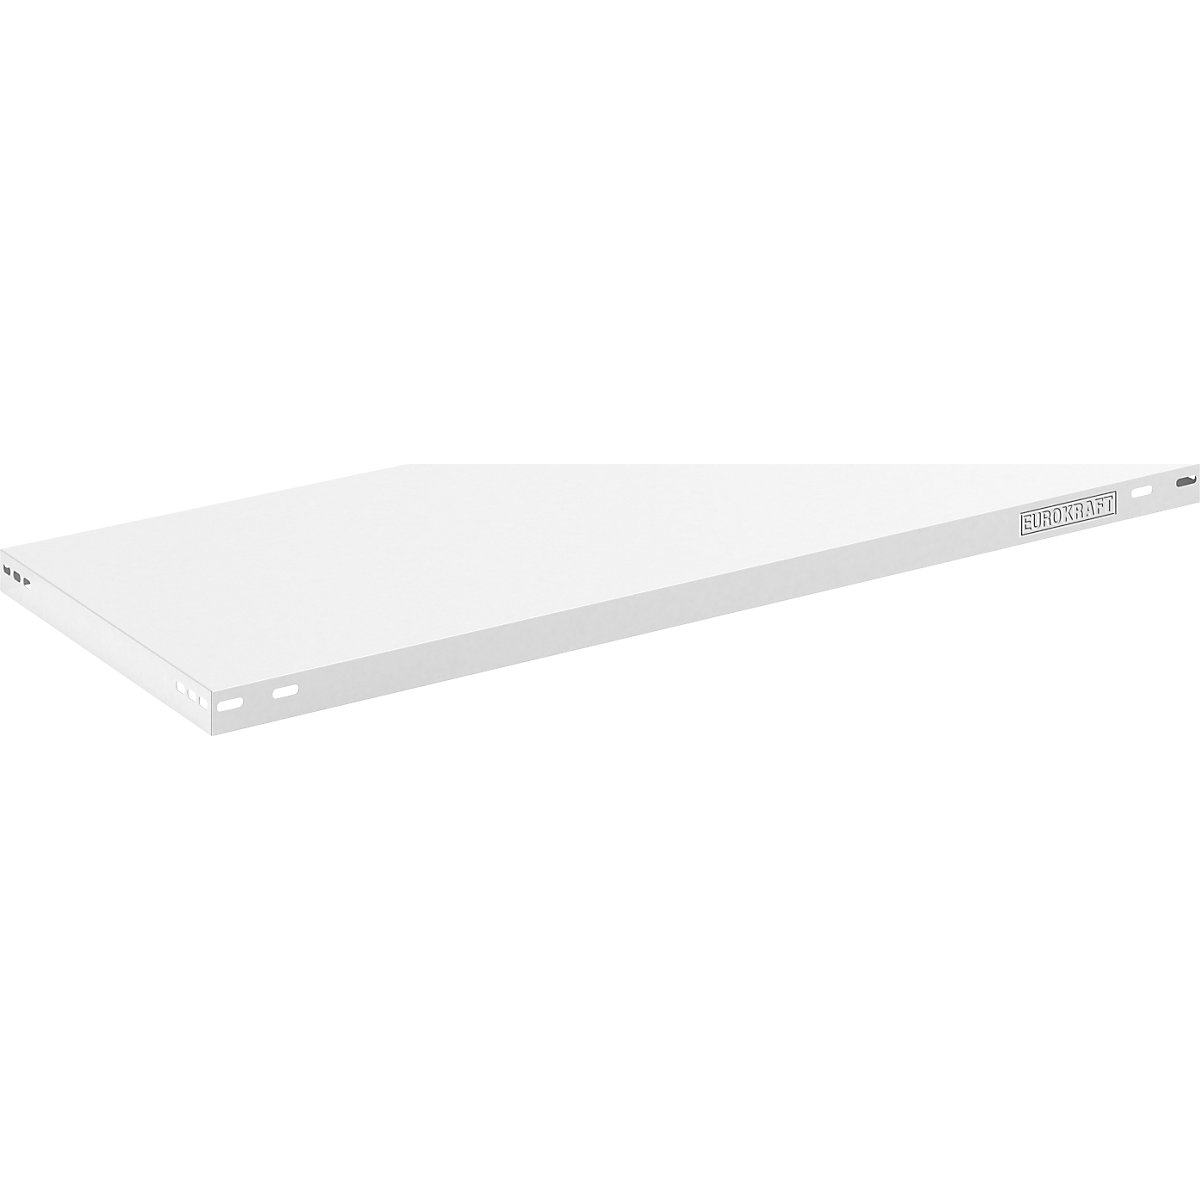 Shelf, max. load 350 kg – eurokraft pro, light grey, WxD 1000 x 500 mm